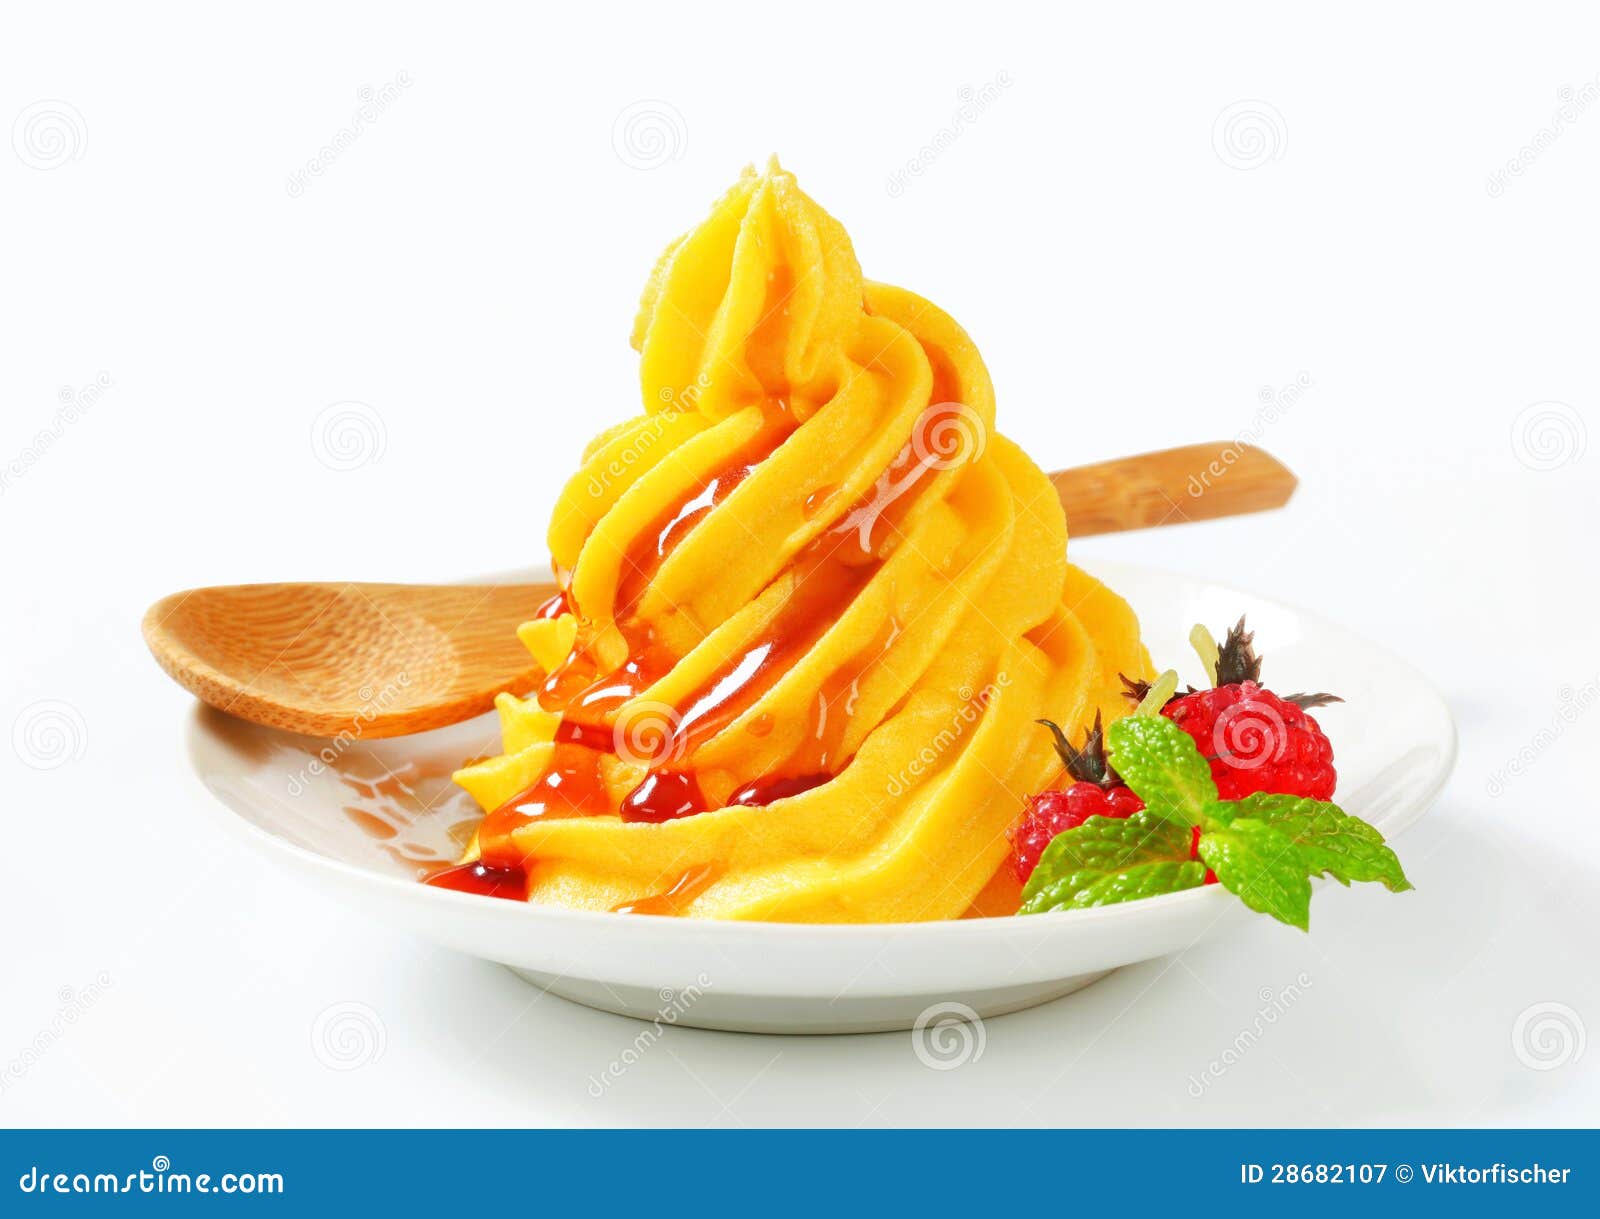 soft serve ice cream with raspberry sauce